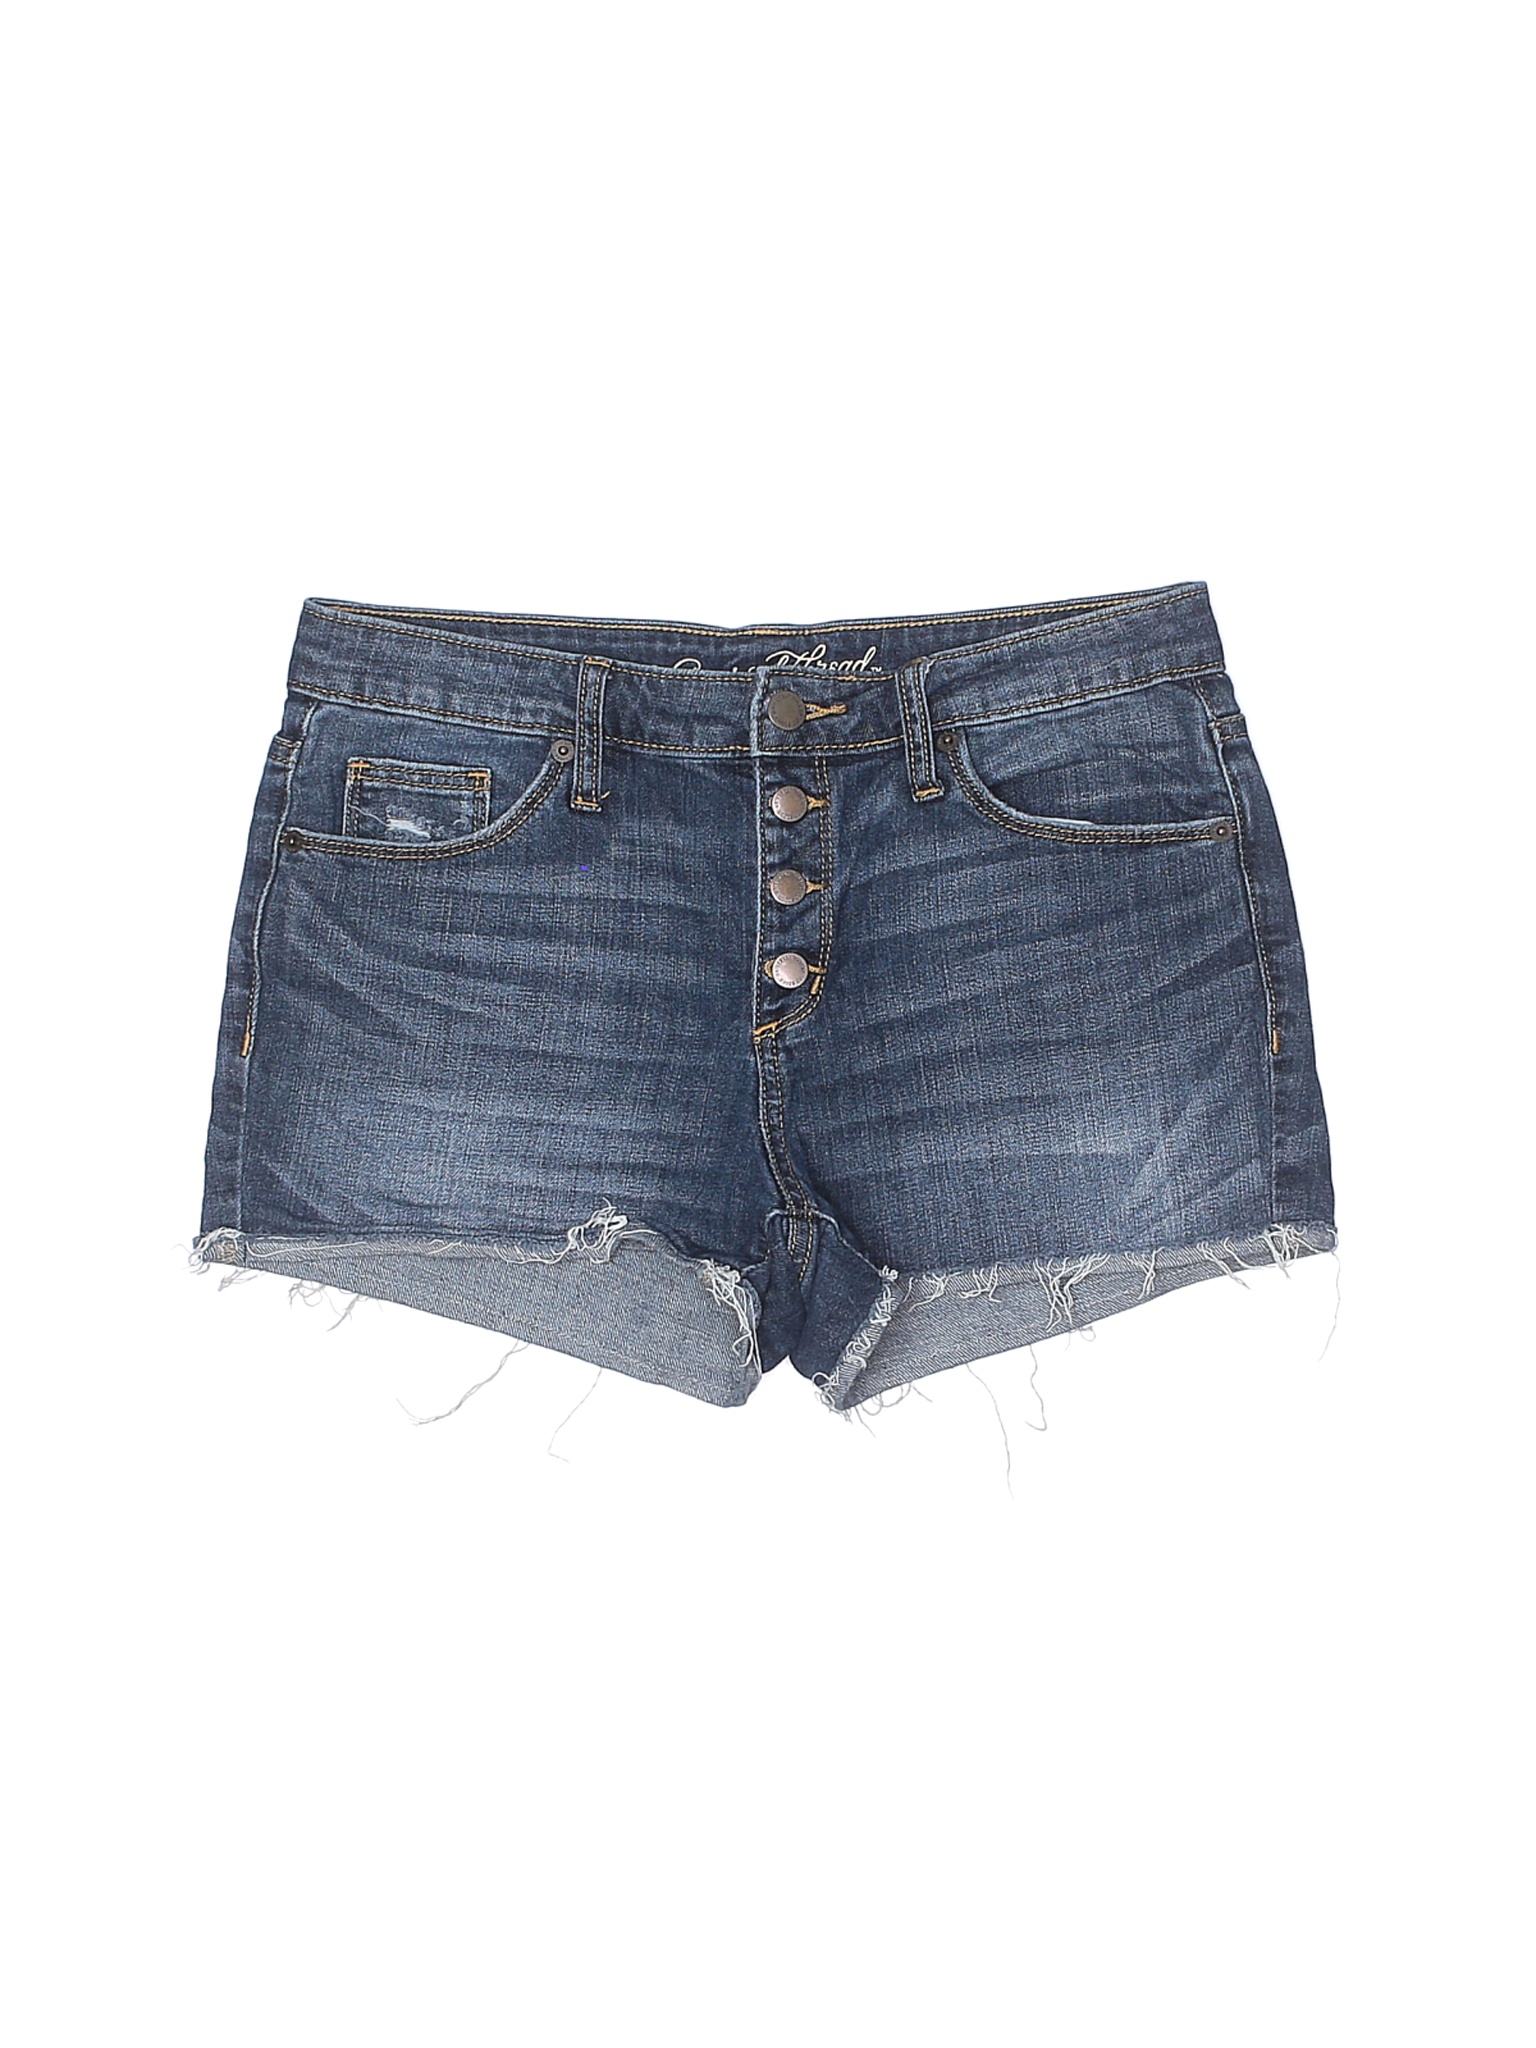 Universal Thread Women Blue Denim Shorts 6 | eBay